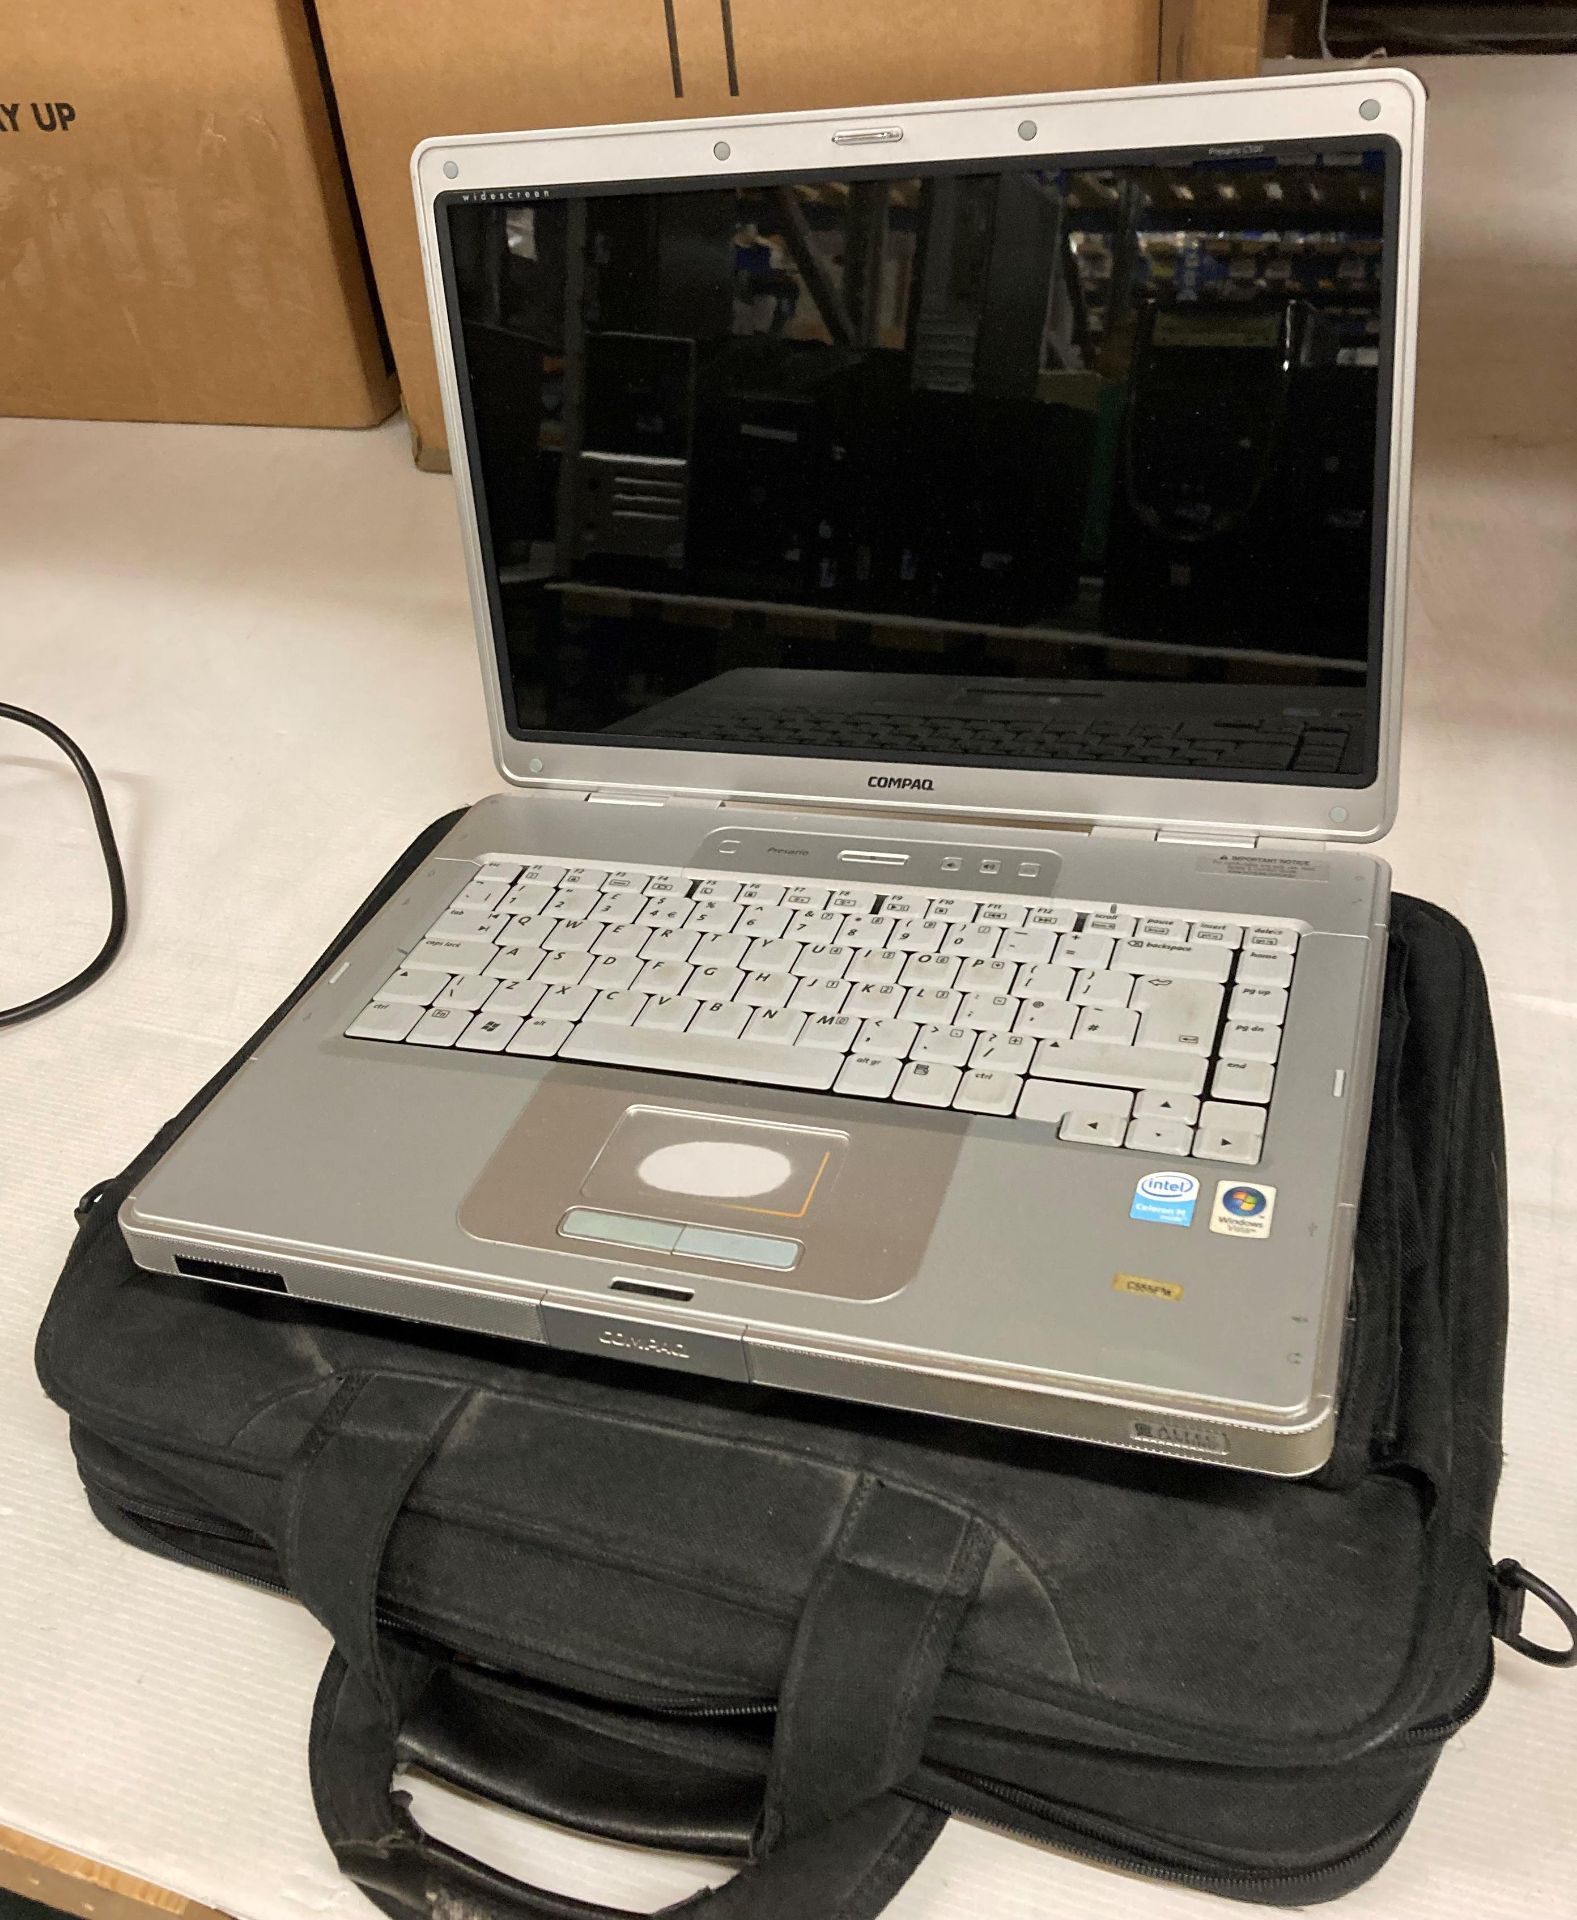 Compaq Laptop 1GB RAM 233GB HD c/w case (no power lead) (saleroom location: M02) - Image 2 of 2